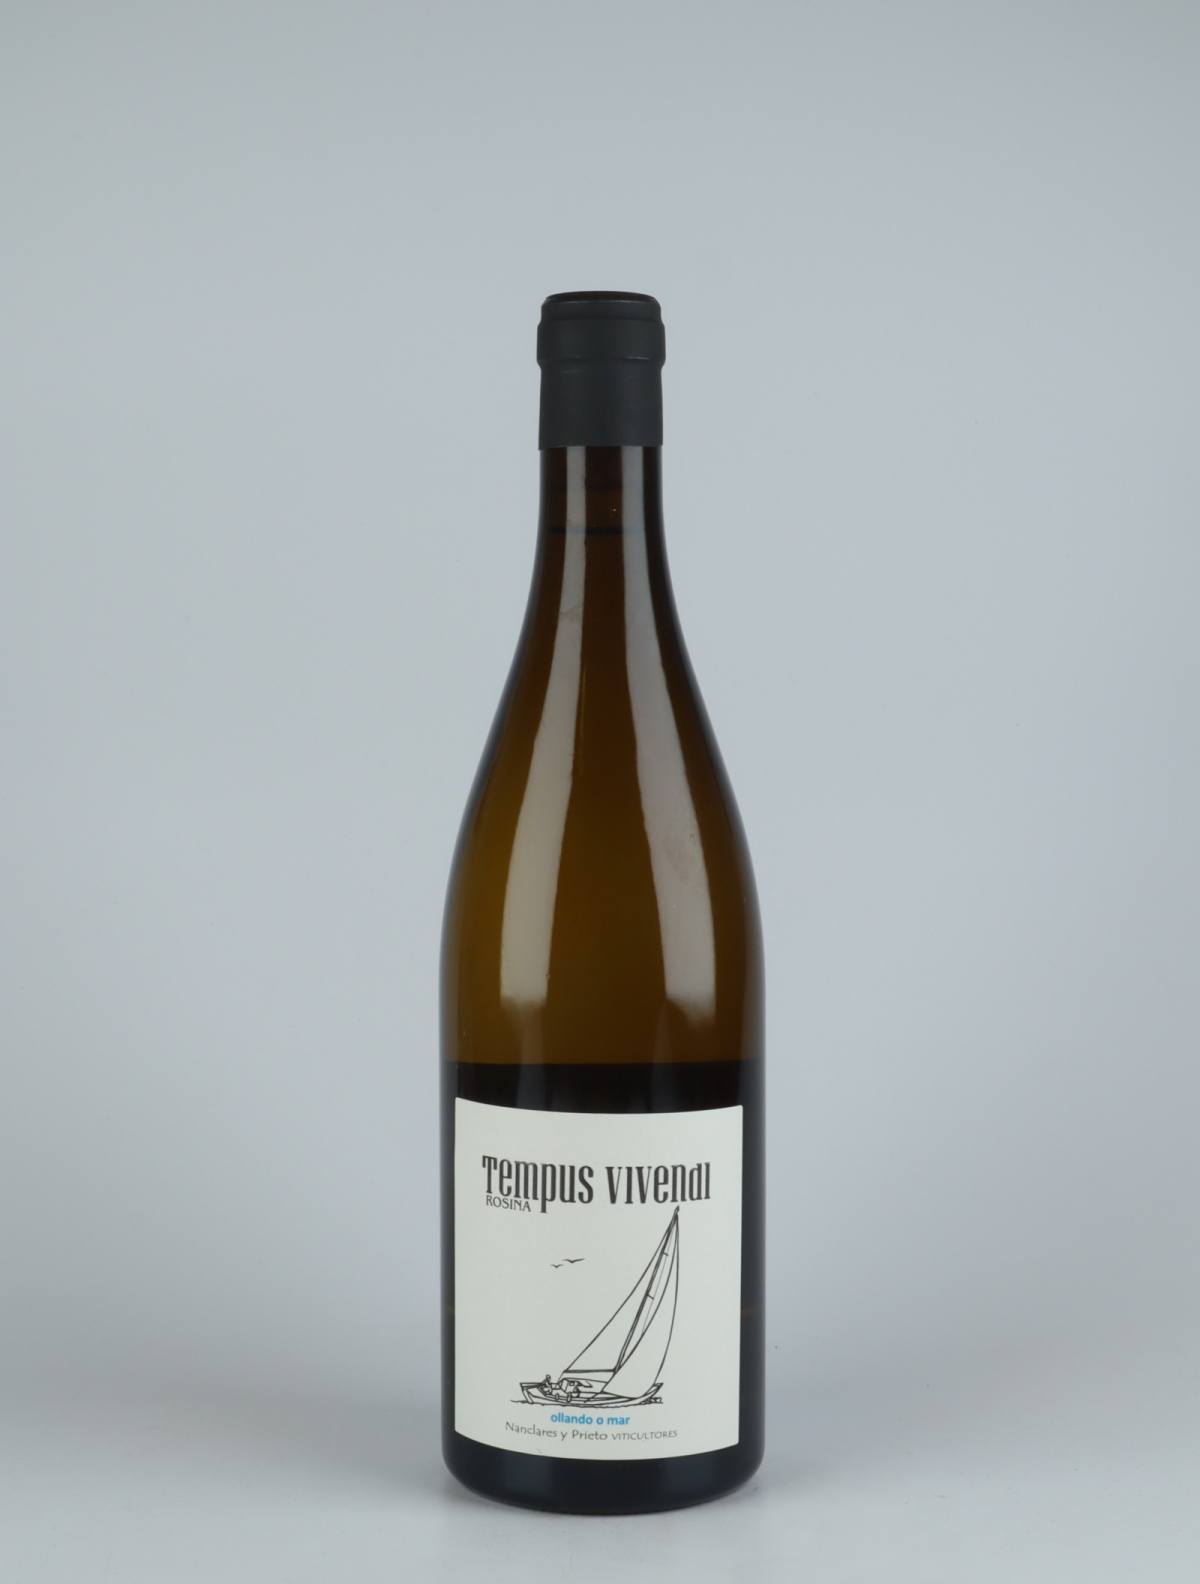 A bottle 2020 Tempus Vivendi White wine from Alberto Nanclares, Rias Baixas in Spain